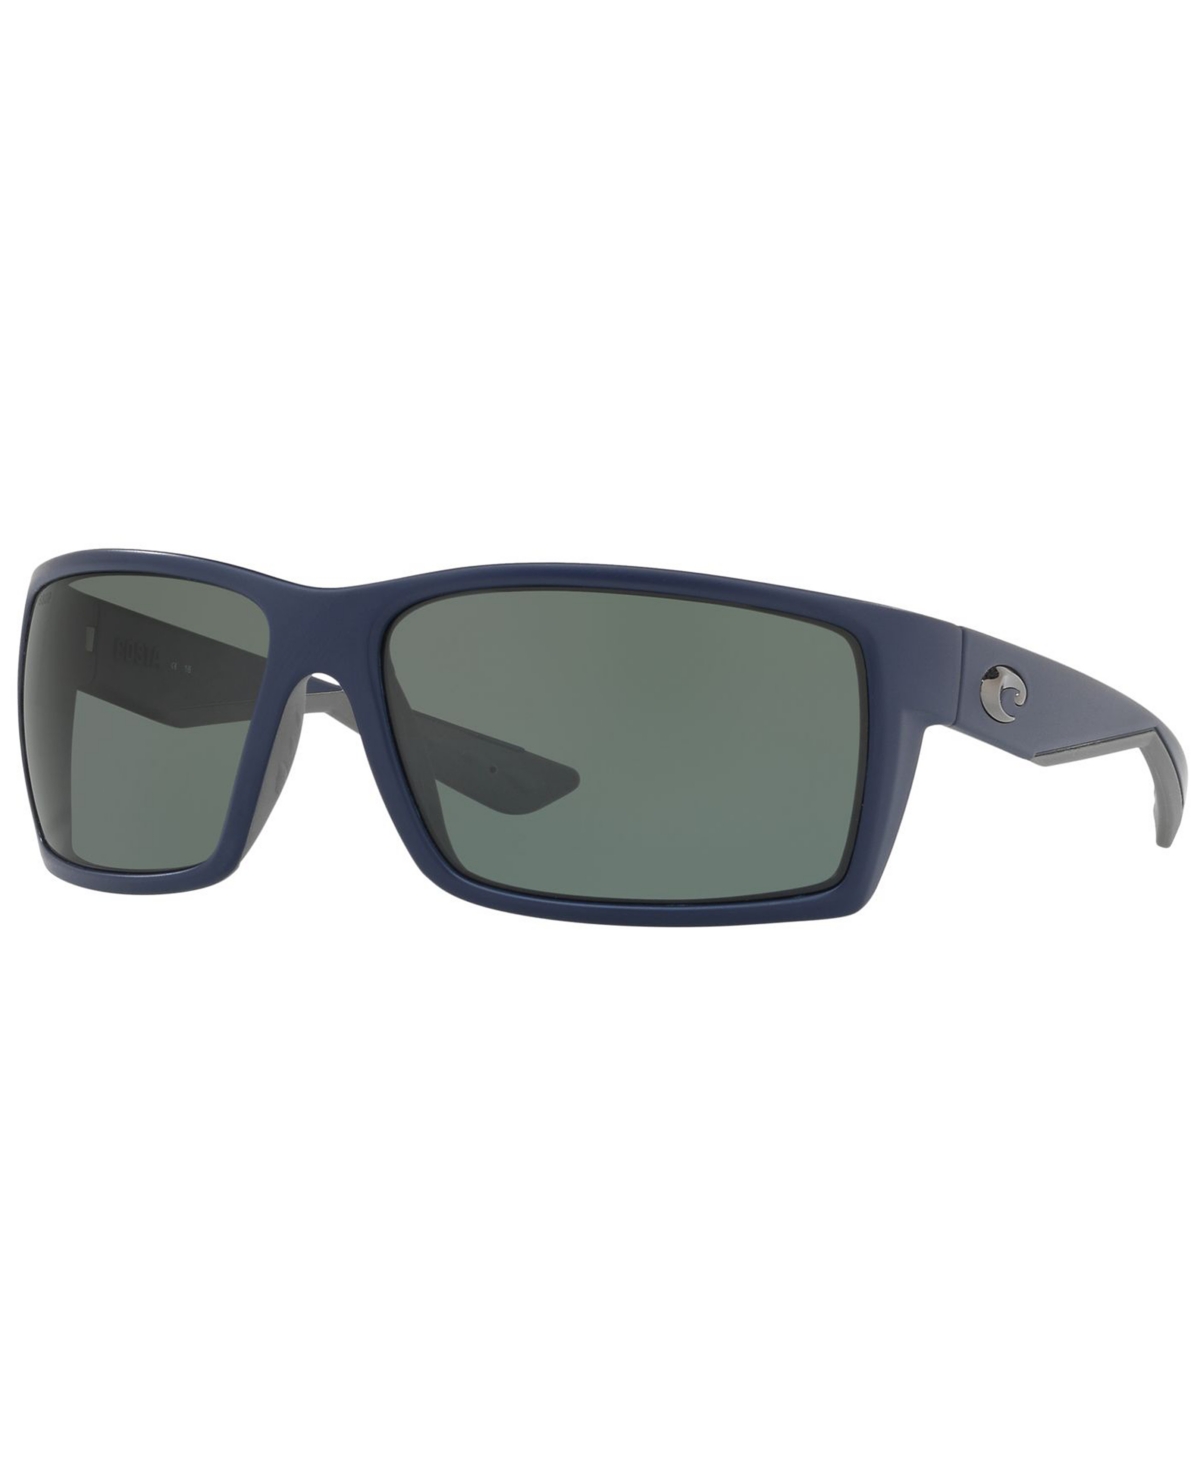 Polarized Sunglasses, Reefton 64 - BLUE DARK/ GREY POLAR